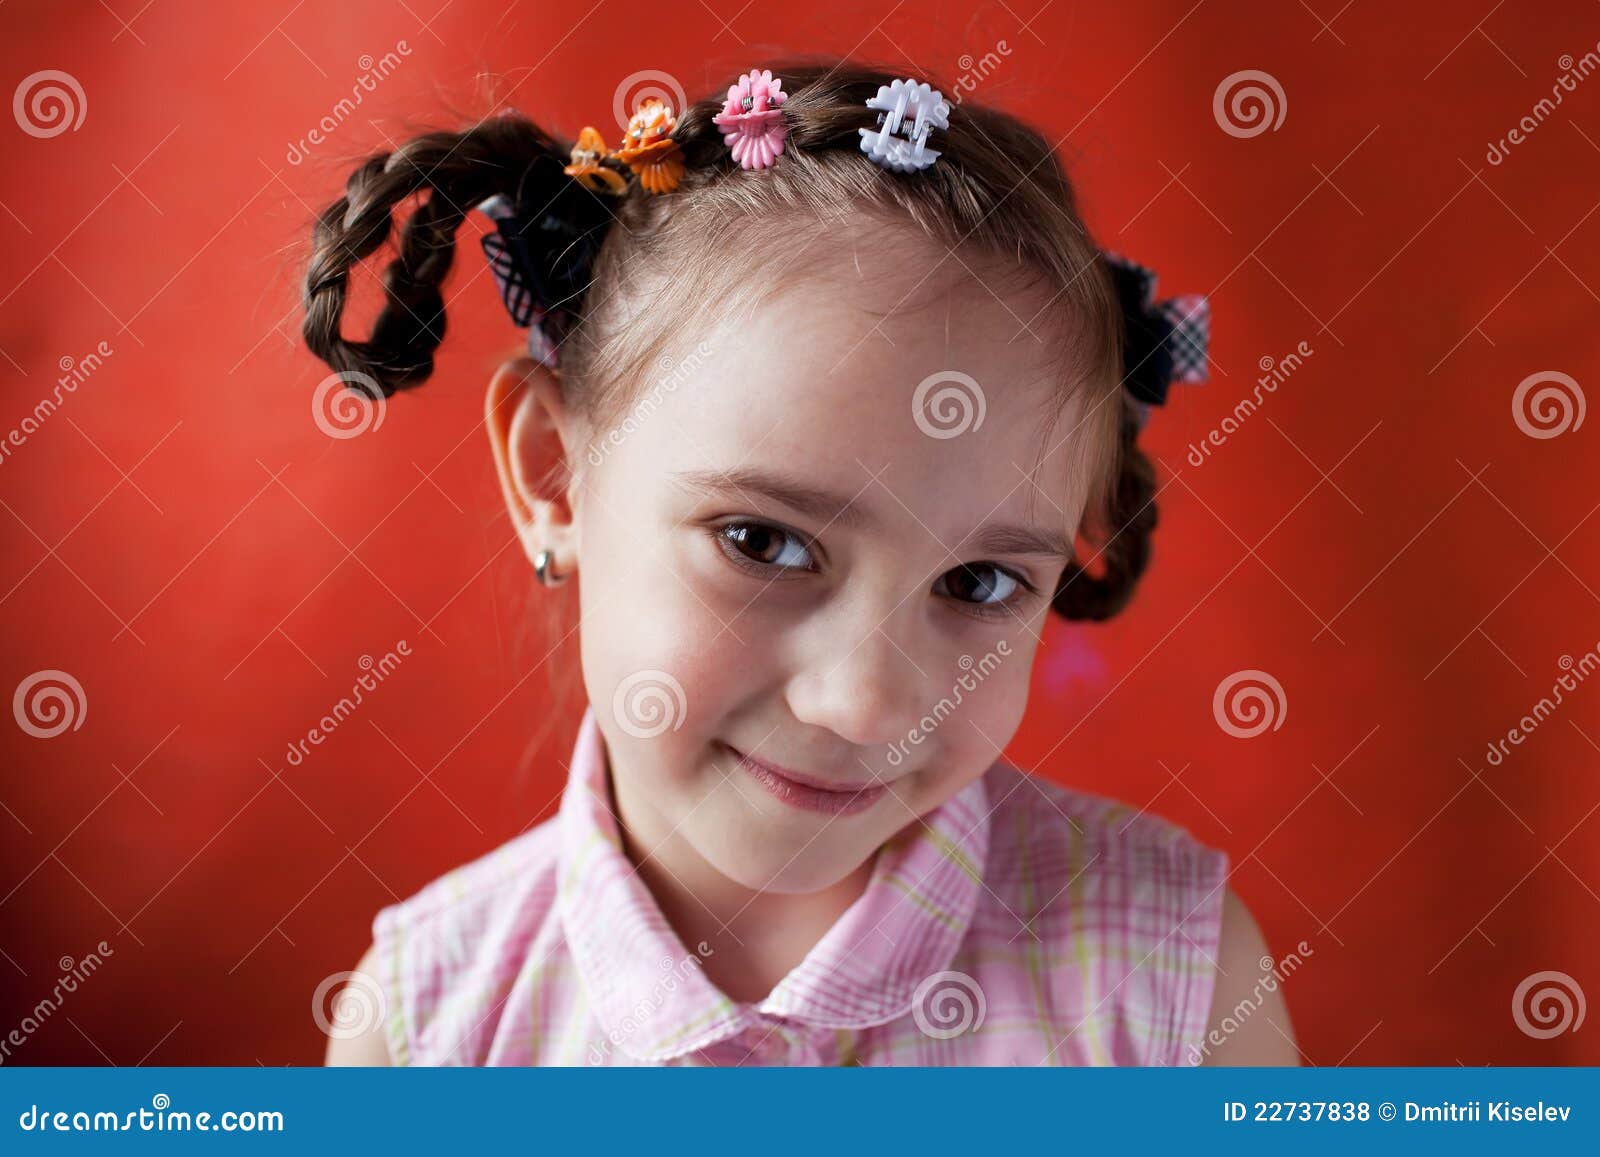 The Little Girl Naughty School Age Stock Photo - Image of 